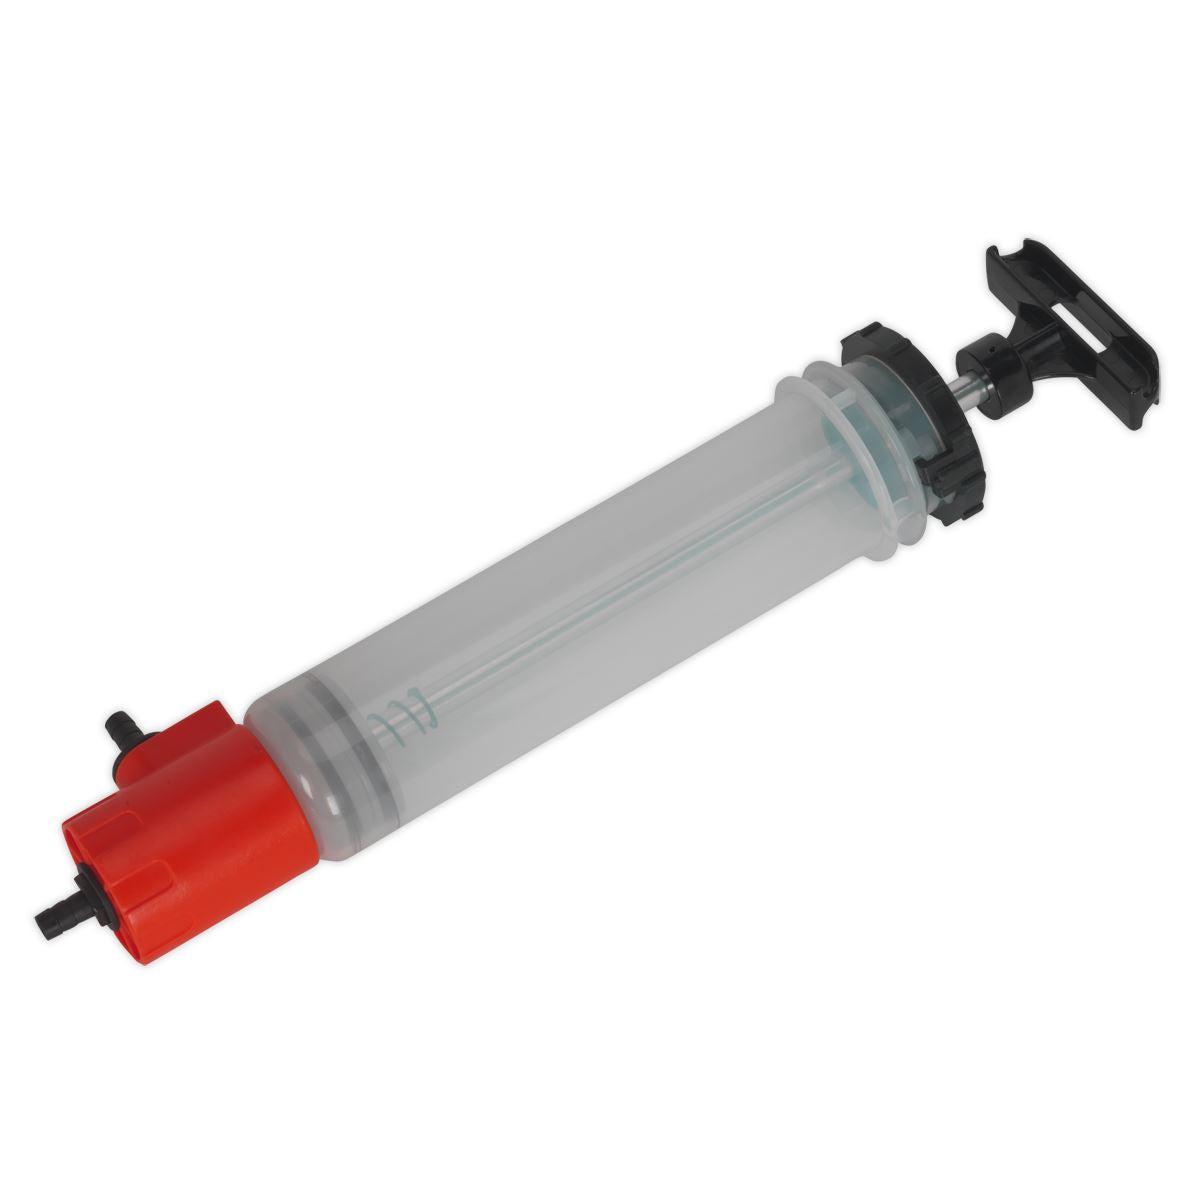 Sealey Fluid Transfer/Inspection Syringe 550ml